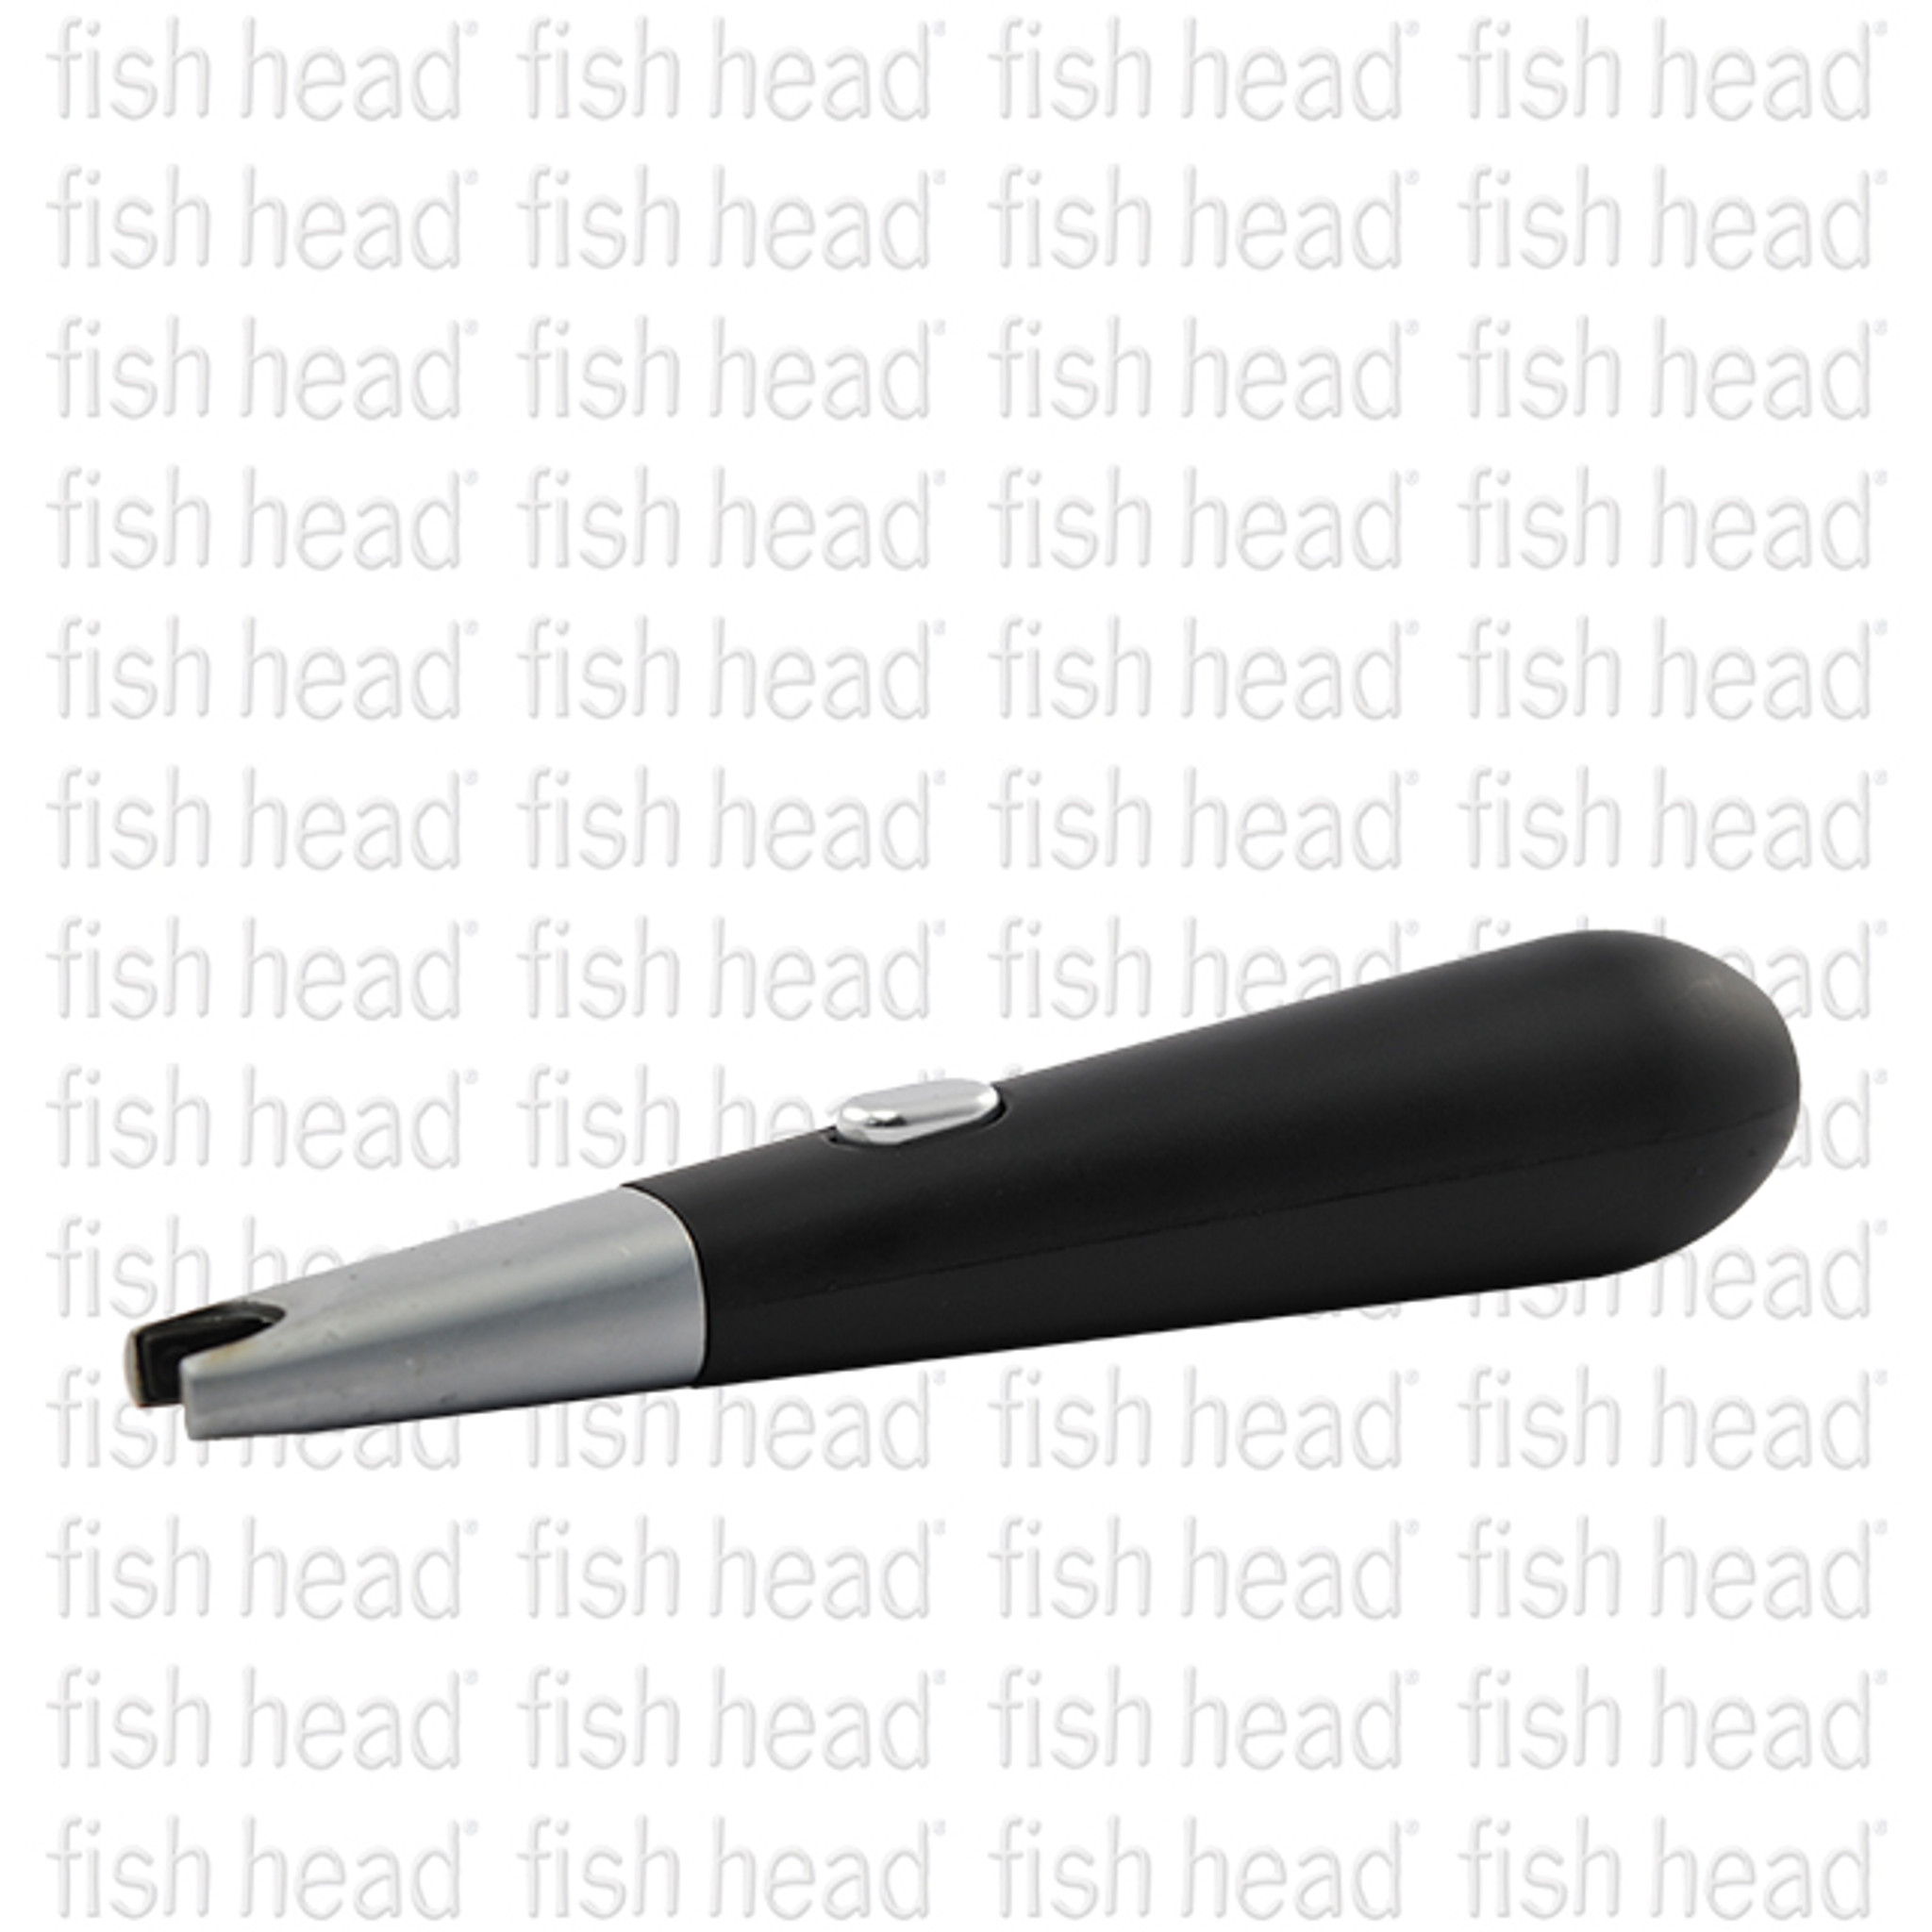 Kahara Line Cutter USB Arc Lighter - Fish Head